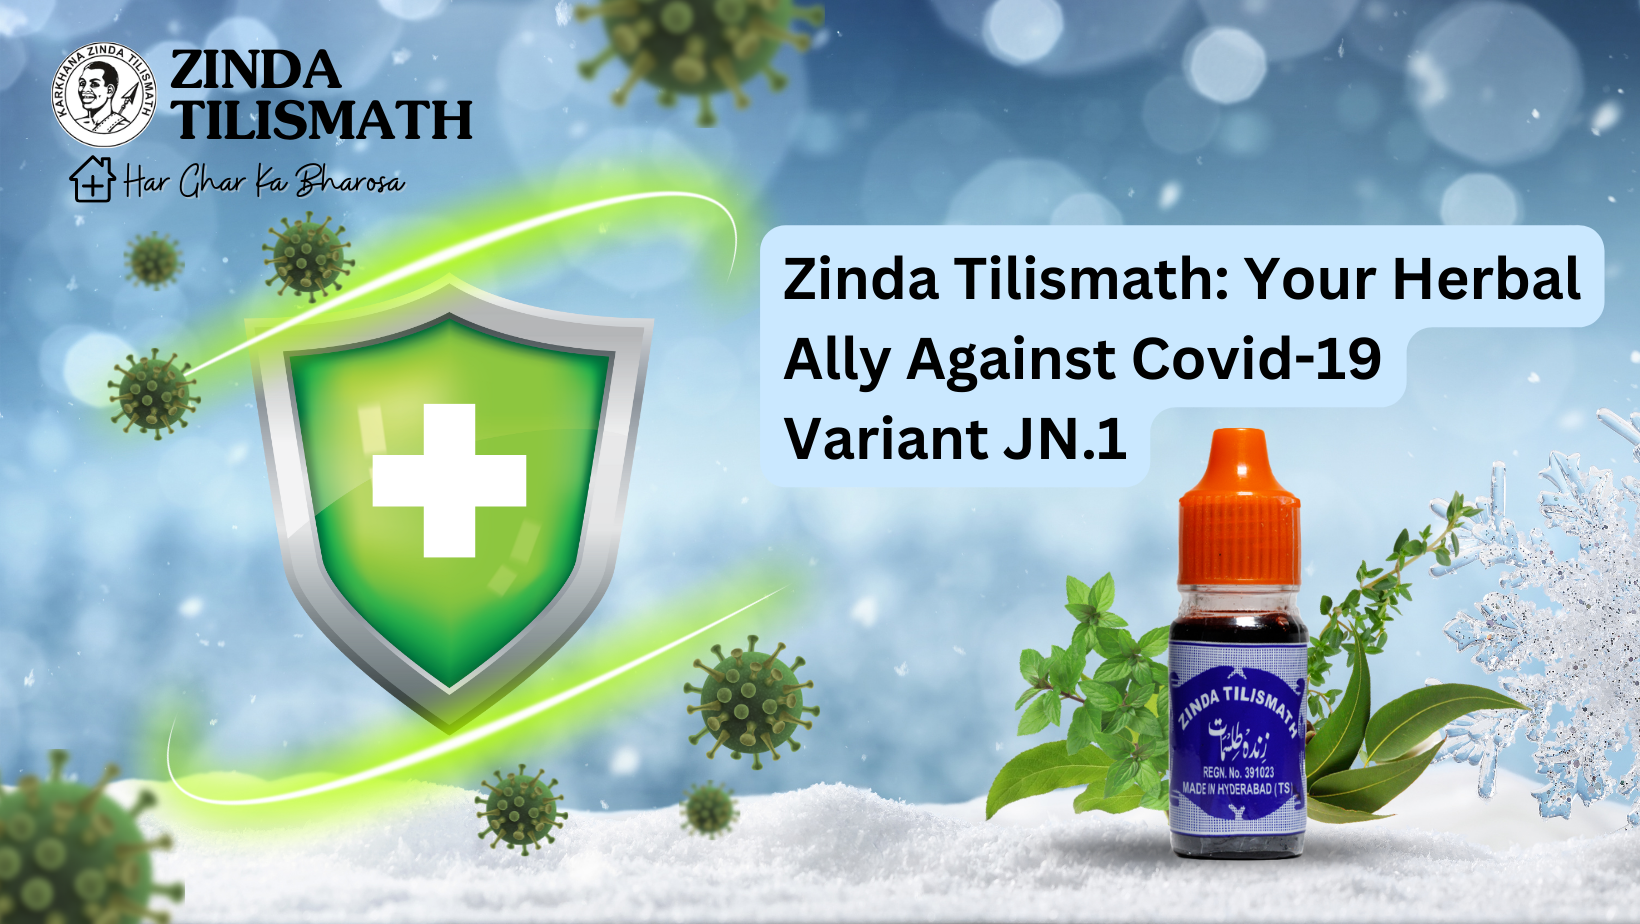 Zinda Tilismath: Your Herbal Ally Against Covid-19 Variant JN.1